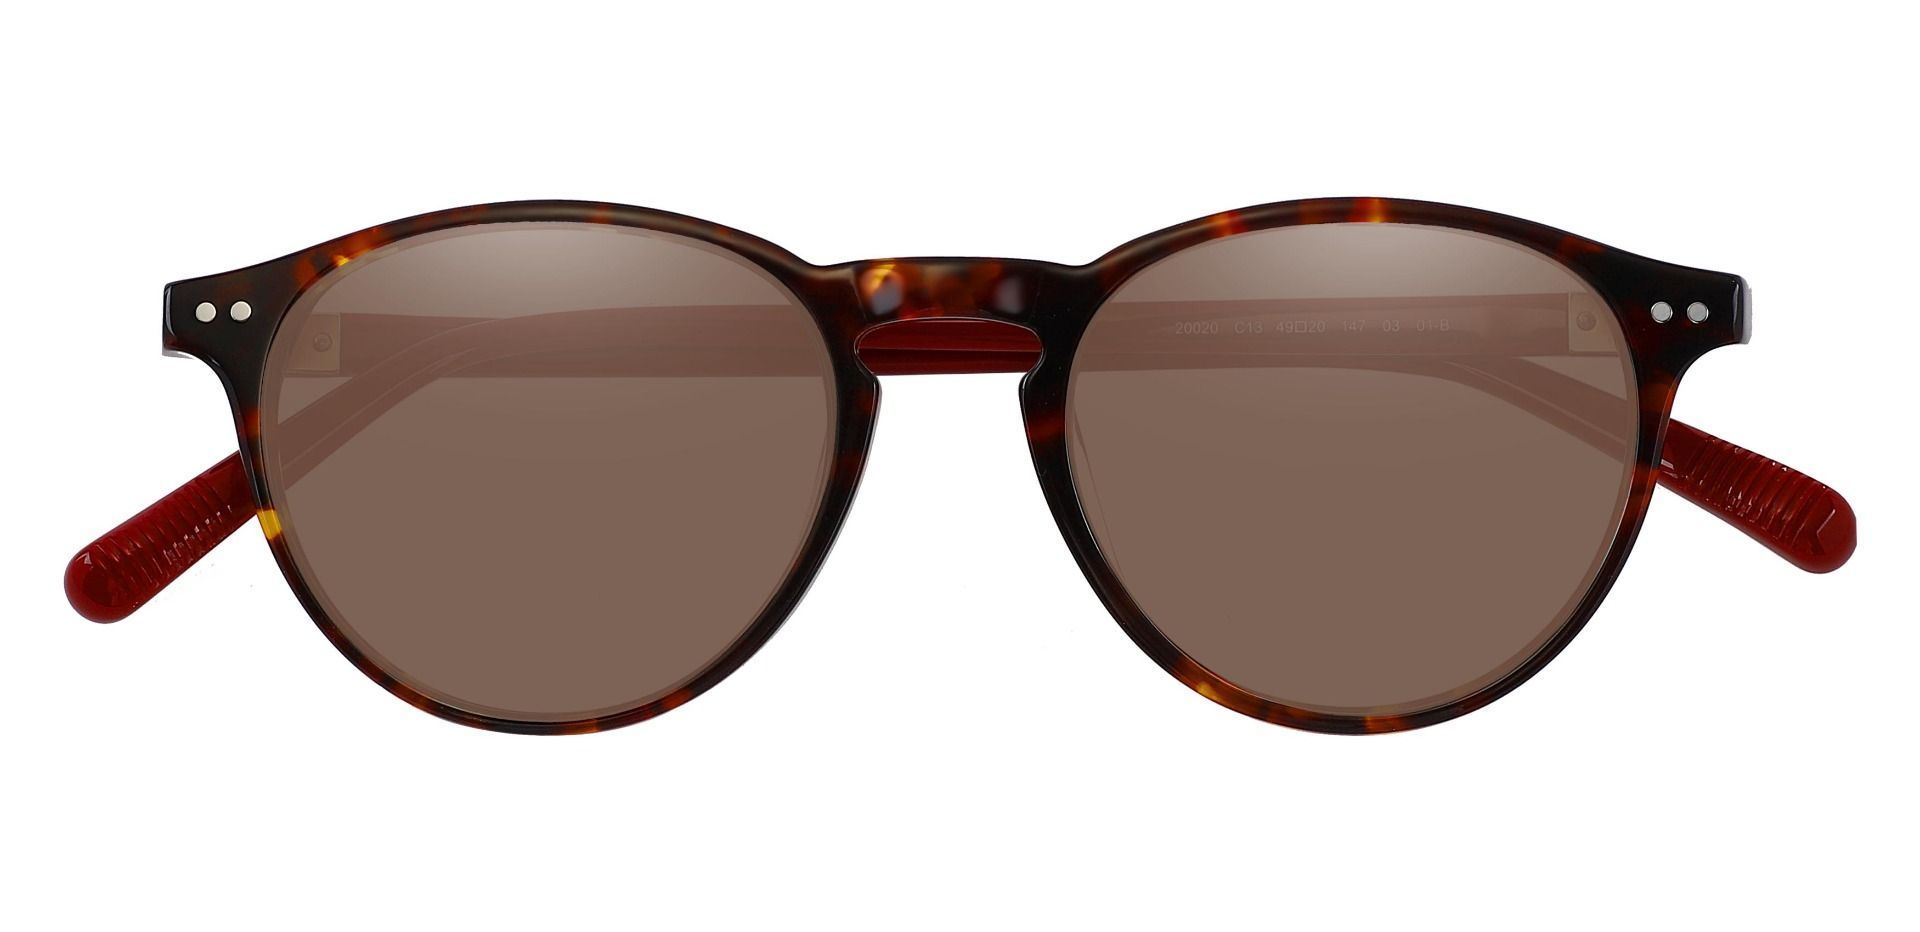 Monarch Oval Progressive Sunglasses - Tortoise Frame With Brown Lenses